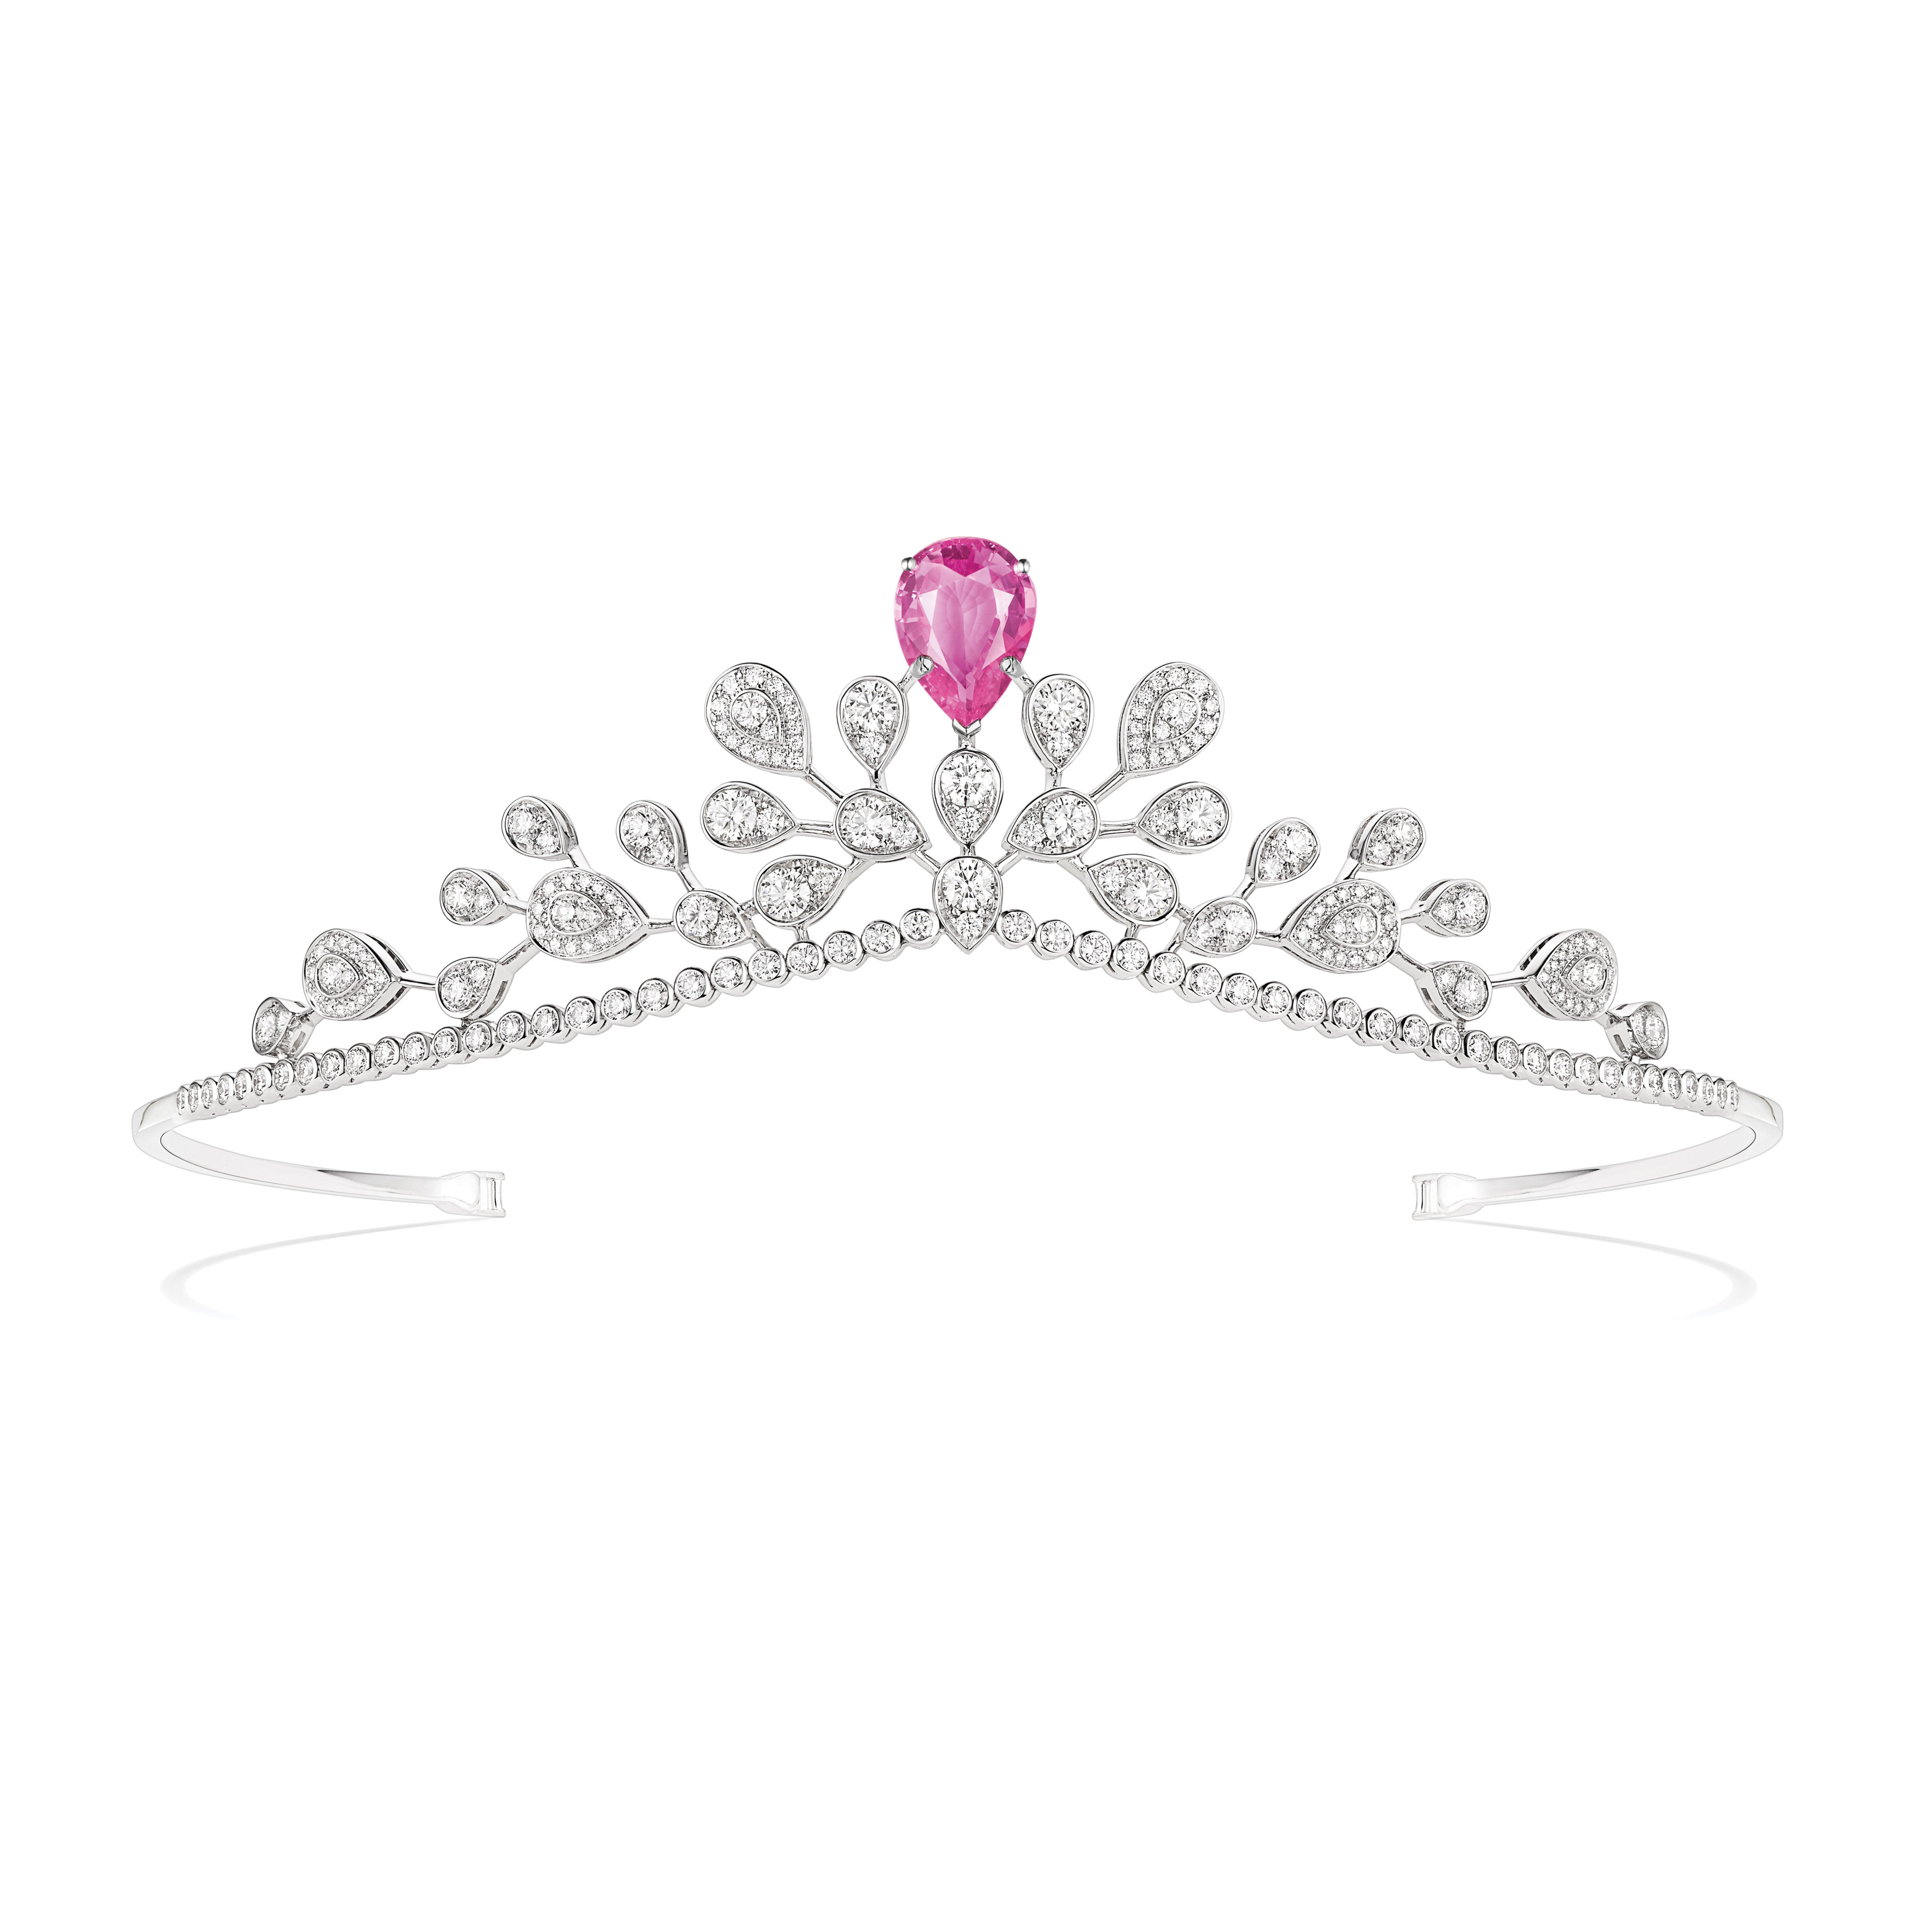 Inside the history between crown jewels and luxury brands: Queen